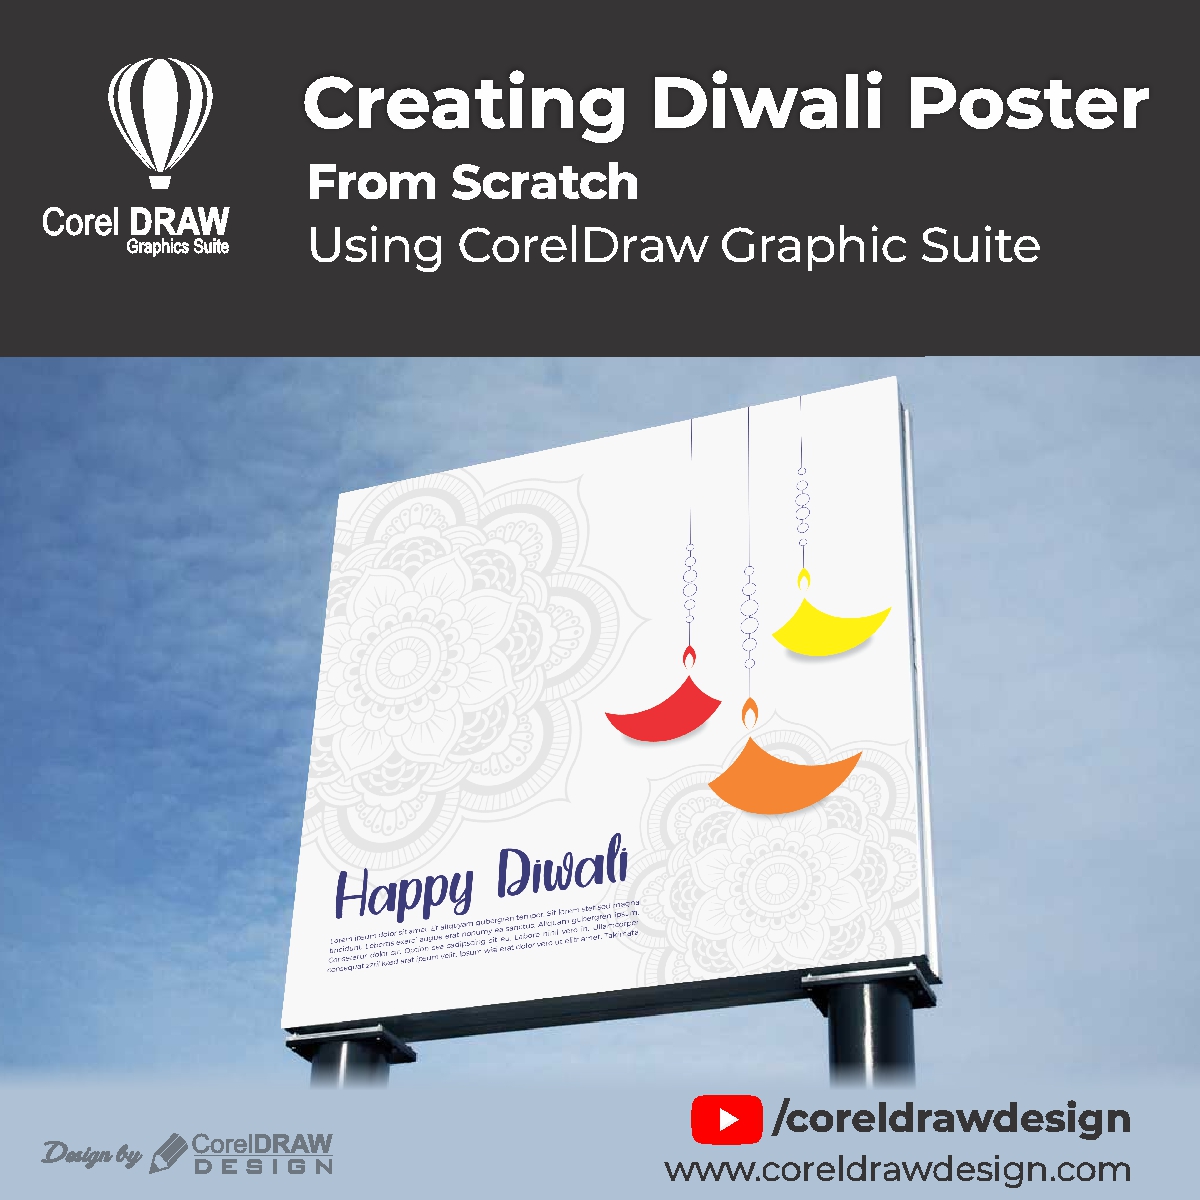 Creating From Scratch Creative Diwali Poster Digital Graphics Tutorial Coreldraw for Beginner